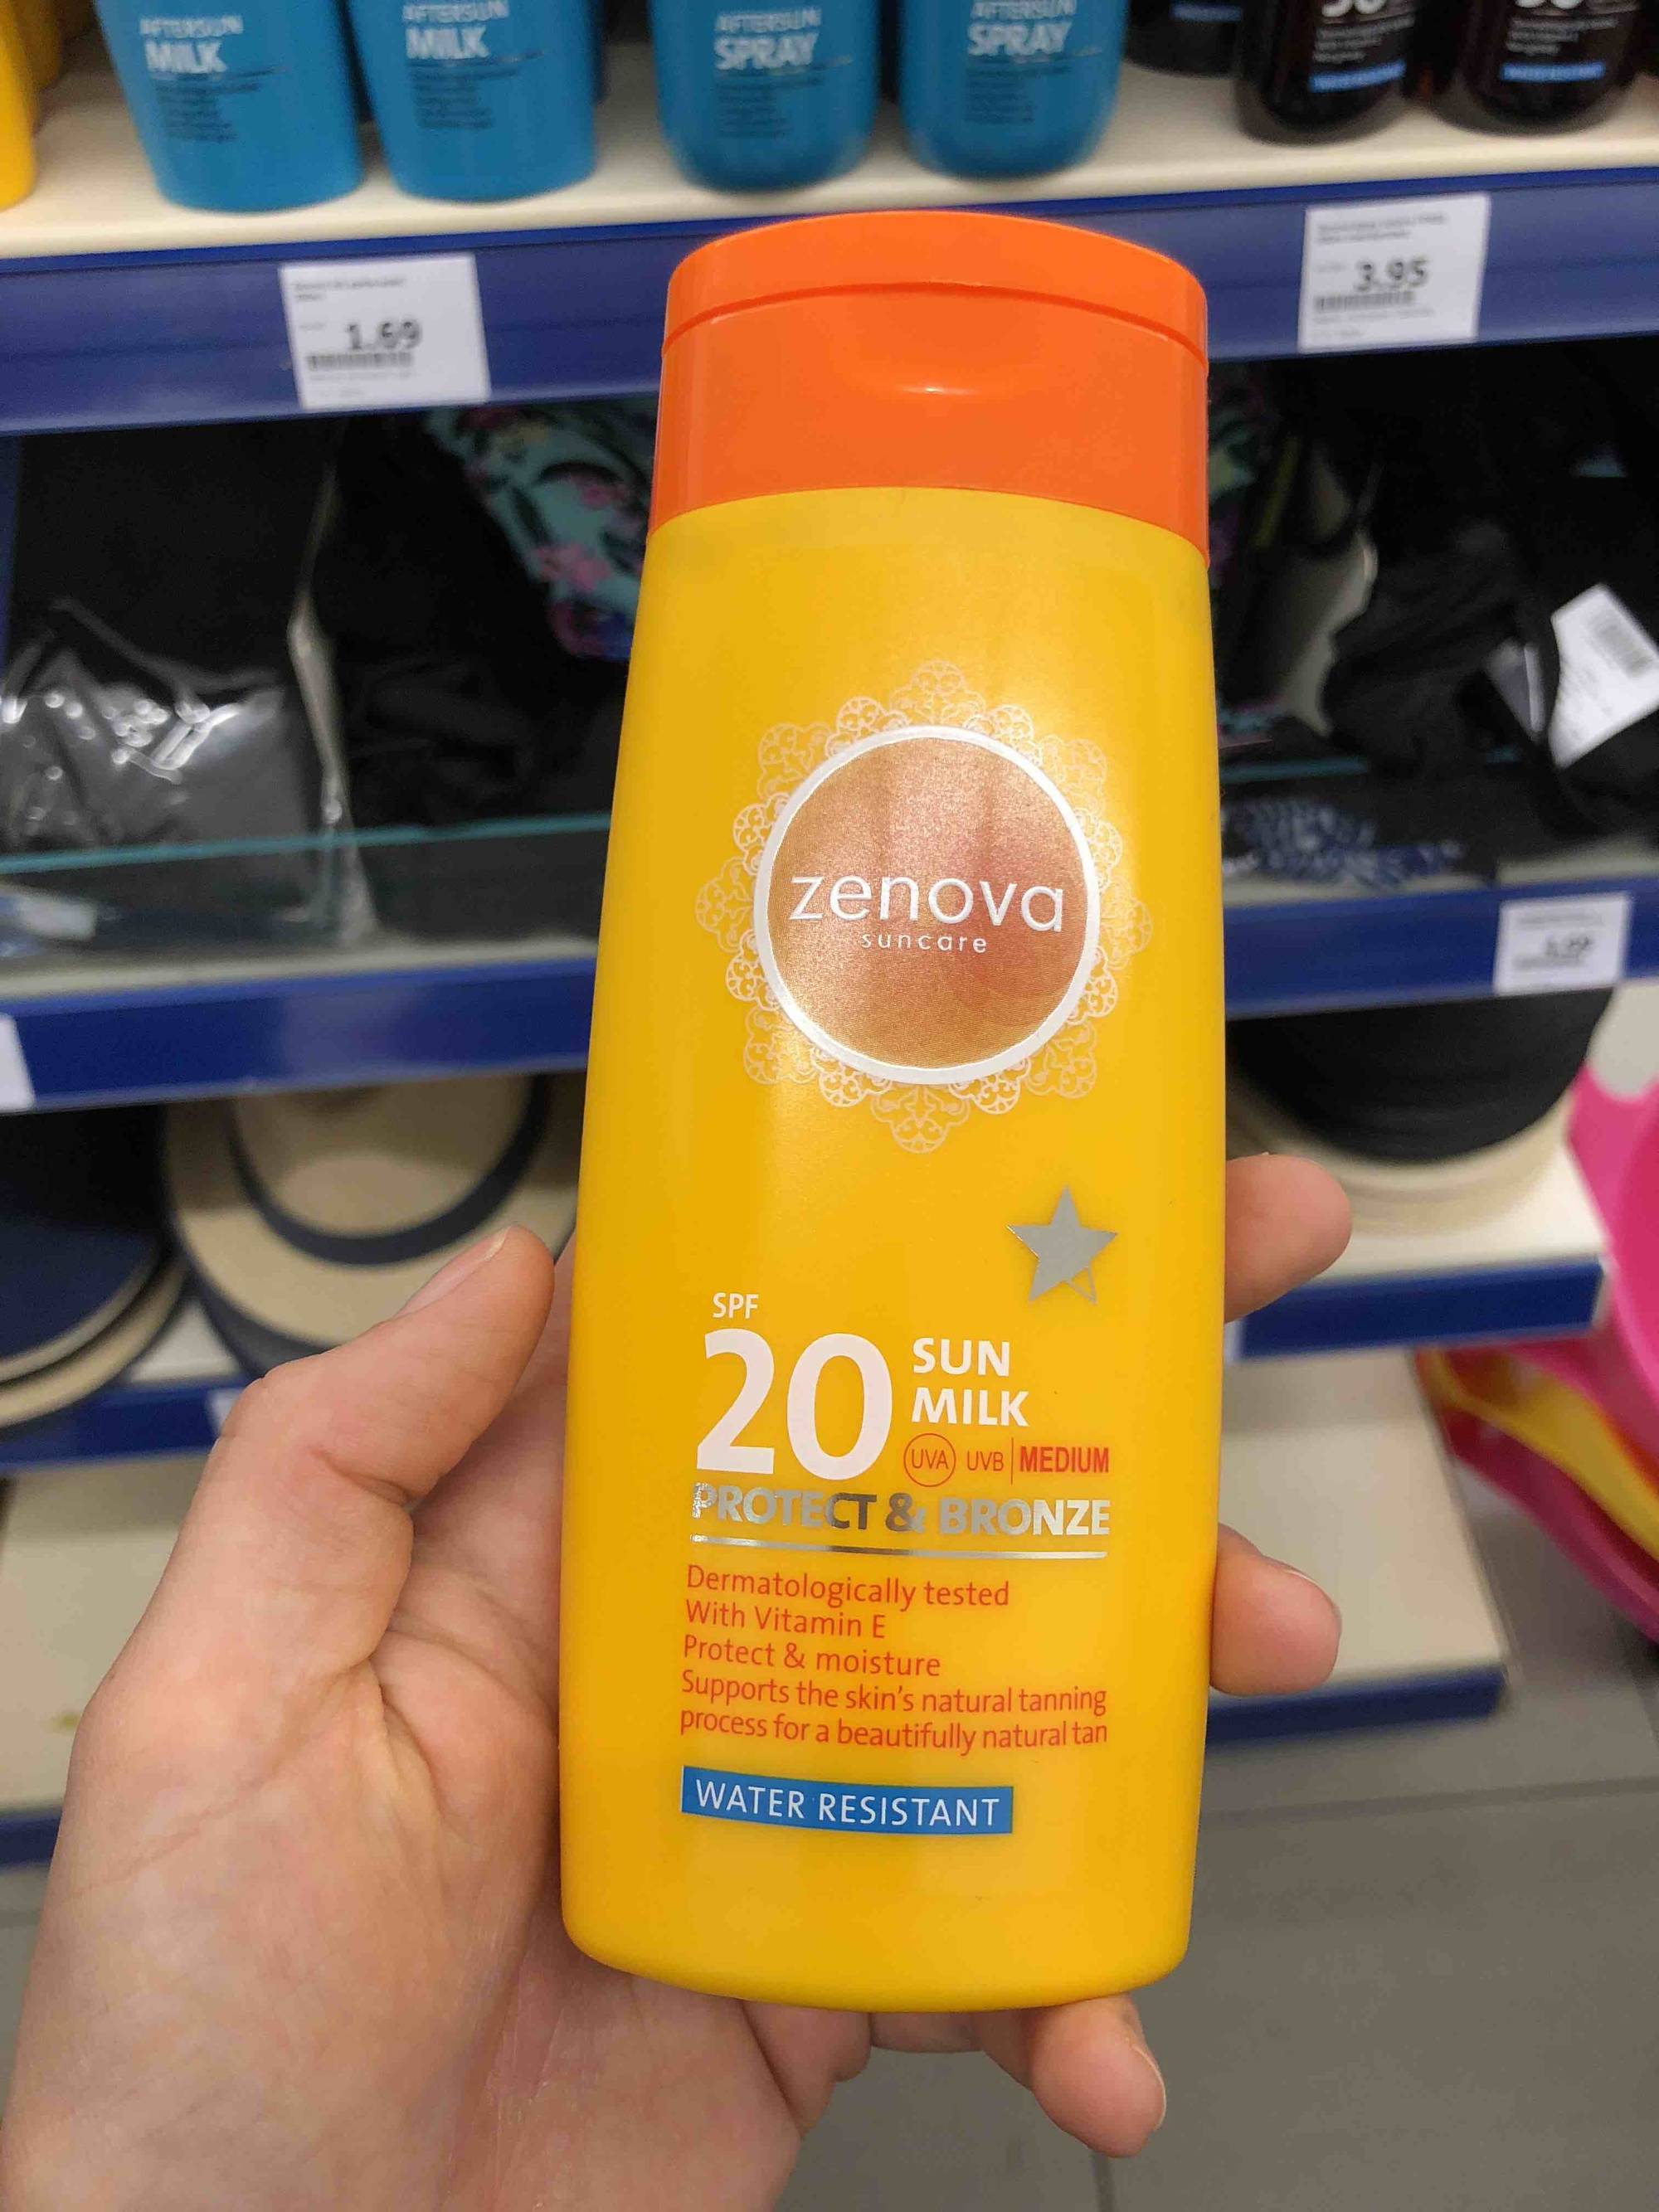 ZENOVA - Protect & Bronze - Sun milk SPF 20